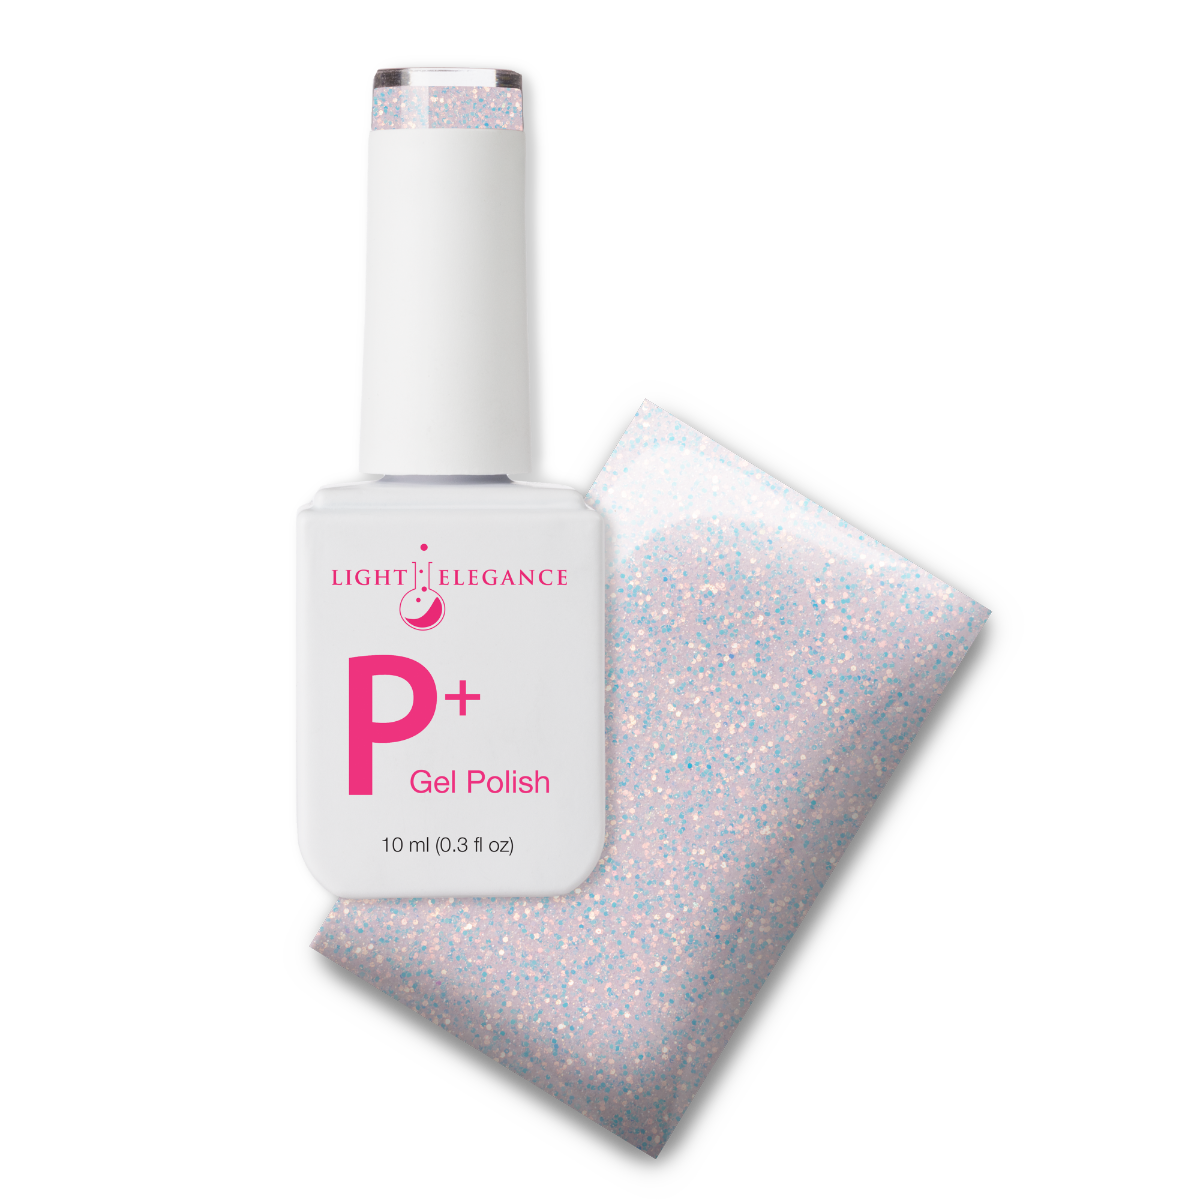 Light Elegance P+ Soak Off Glitter Gel - She's a Star :: New Packaging - Creata Beauty - Professional Beauty Products